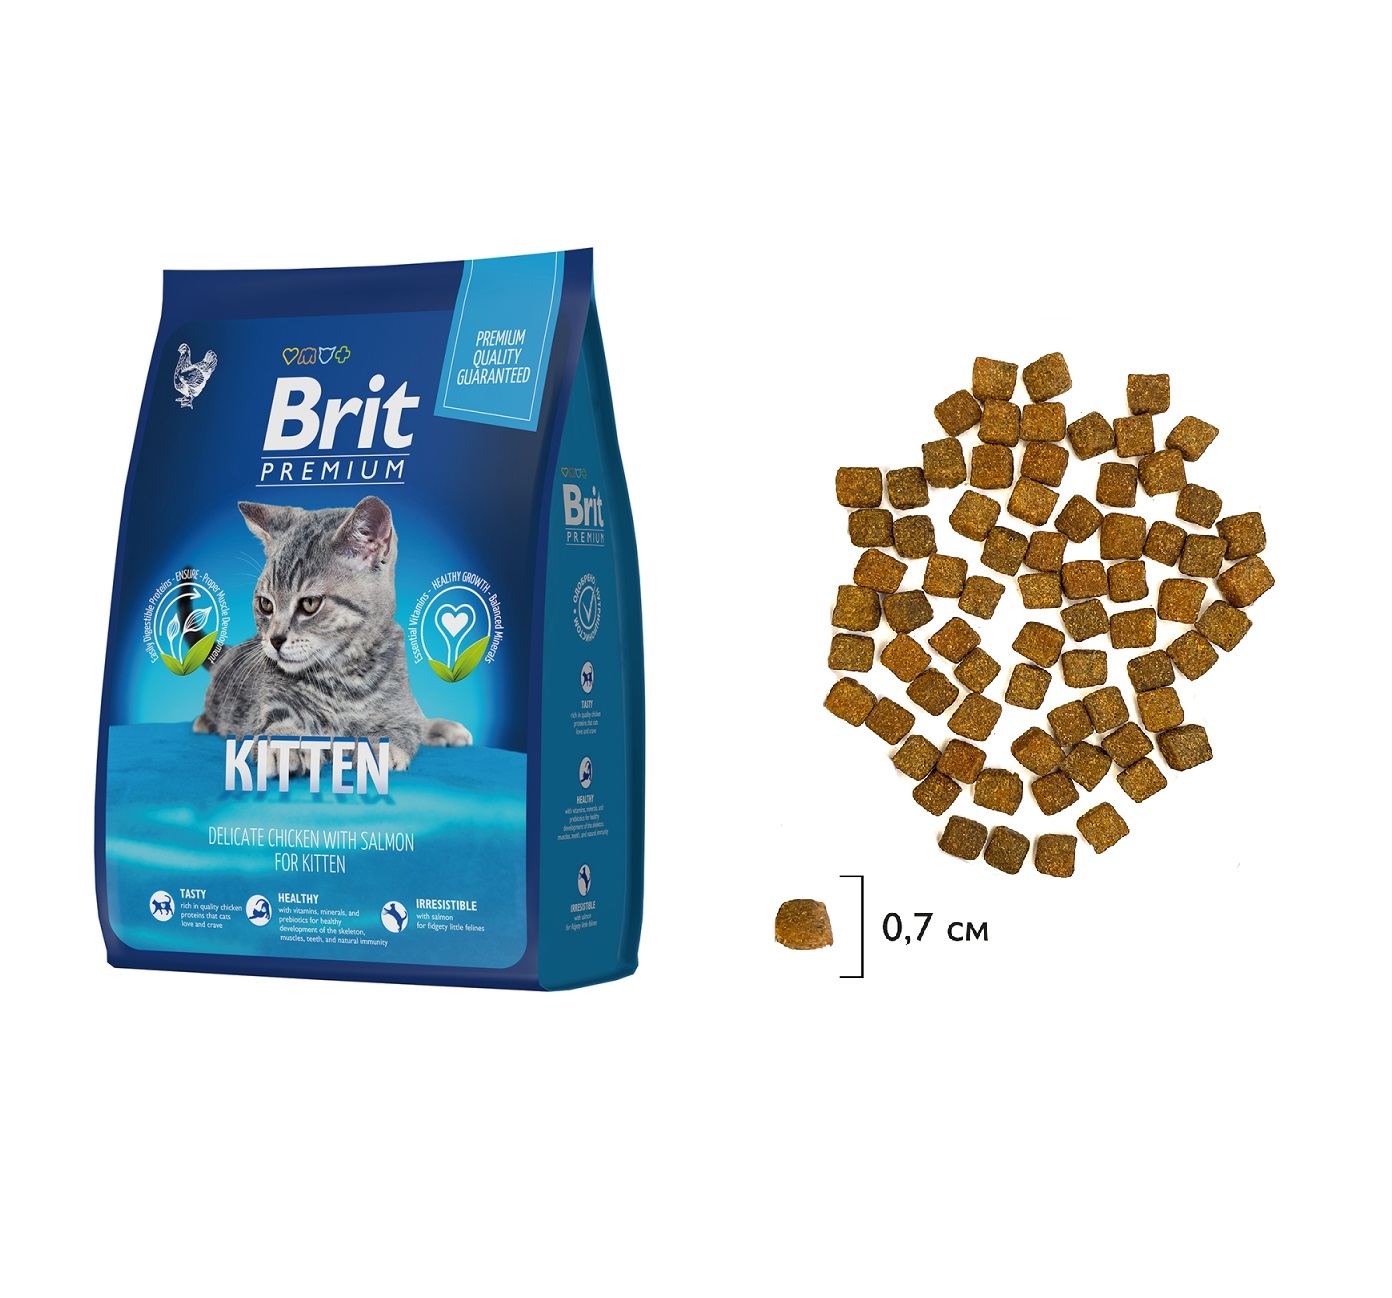 Брит Премиум - Курица Киттен, для Котят, весовой (1кг) (Brit Premium by Nature)